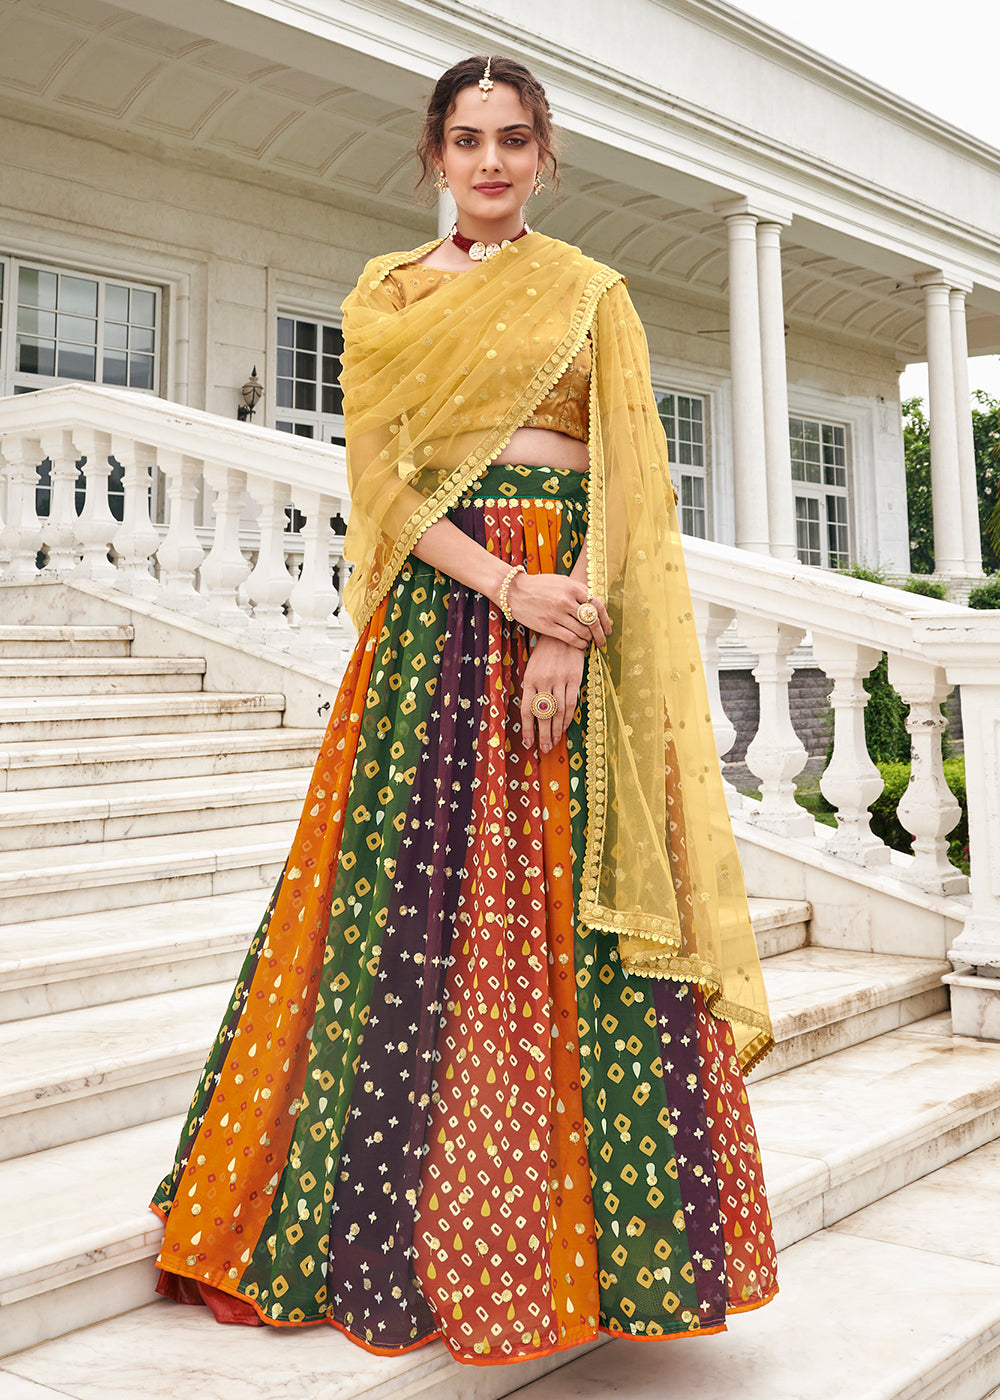 Buy Now Superior Multicolor & Gold Printed Wedding Lehenga Choli Online in USA, UK, Canada & Worldwide at Empress Clothing.